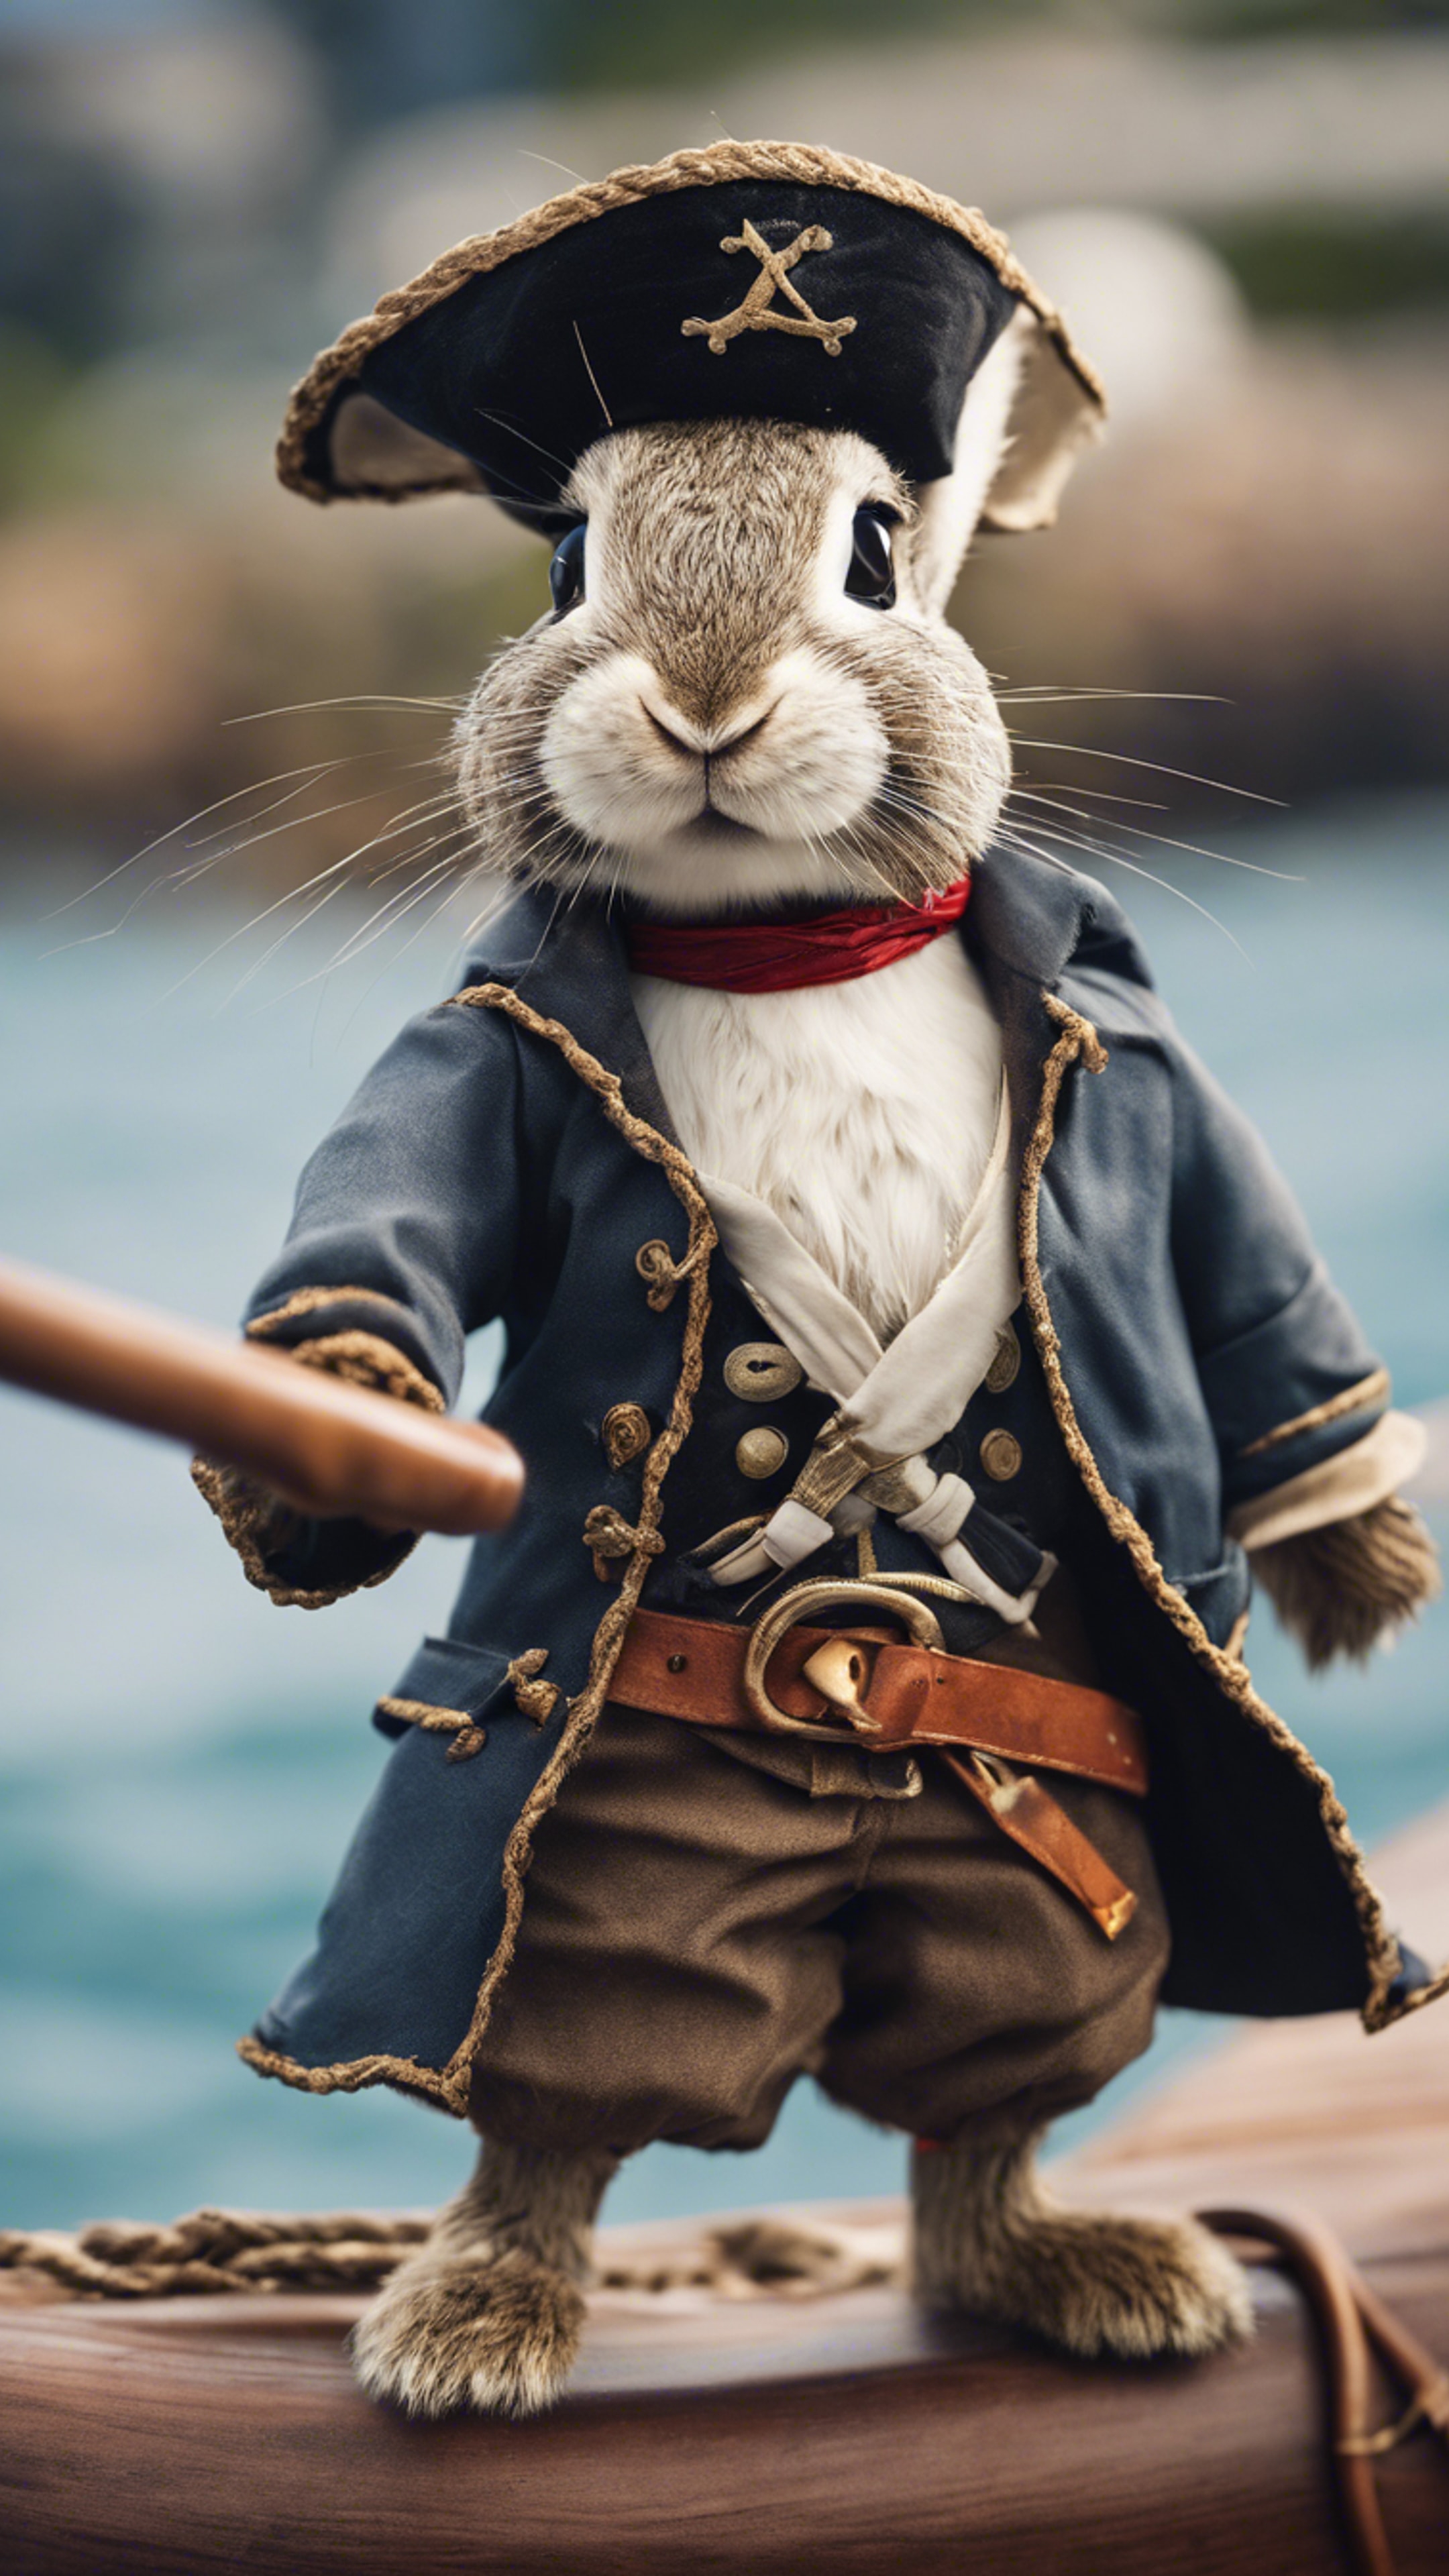 A daring rabbit pirate sailing the high seas. Wallpaper[1f90c9637d8f4113a4b3]